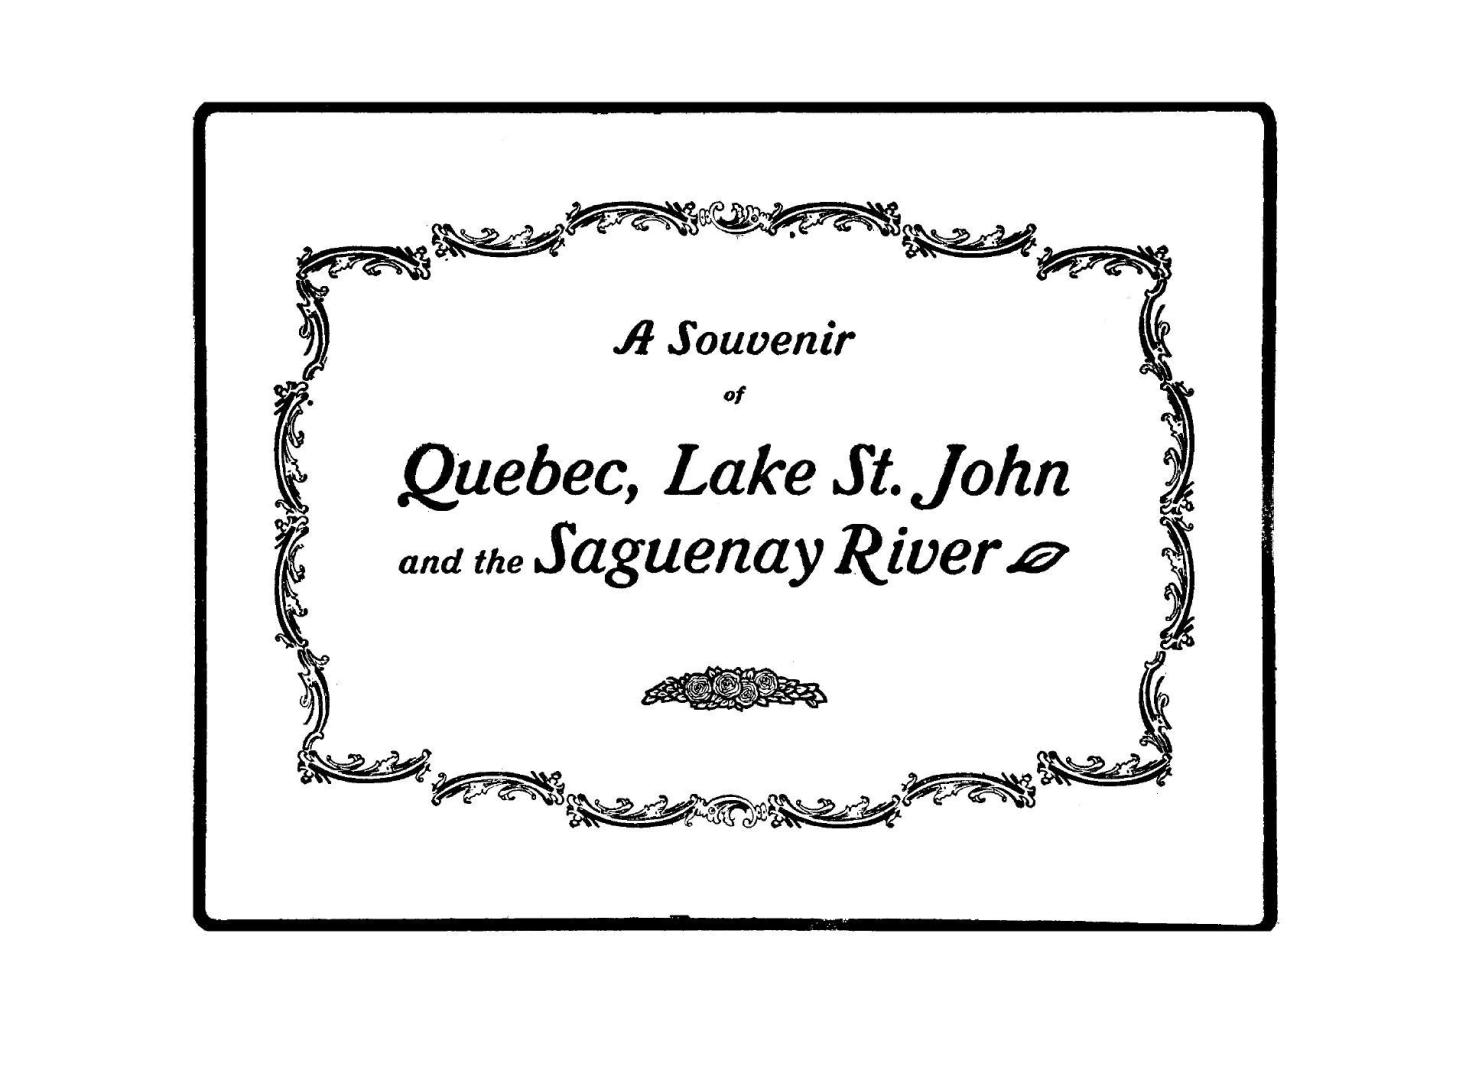 A souvenir of Québec, Lake St. John and the Saguenay River.